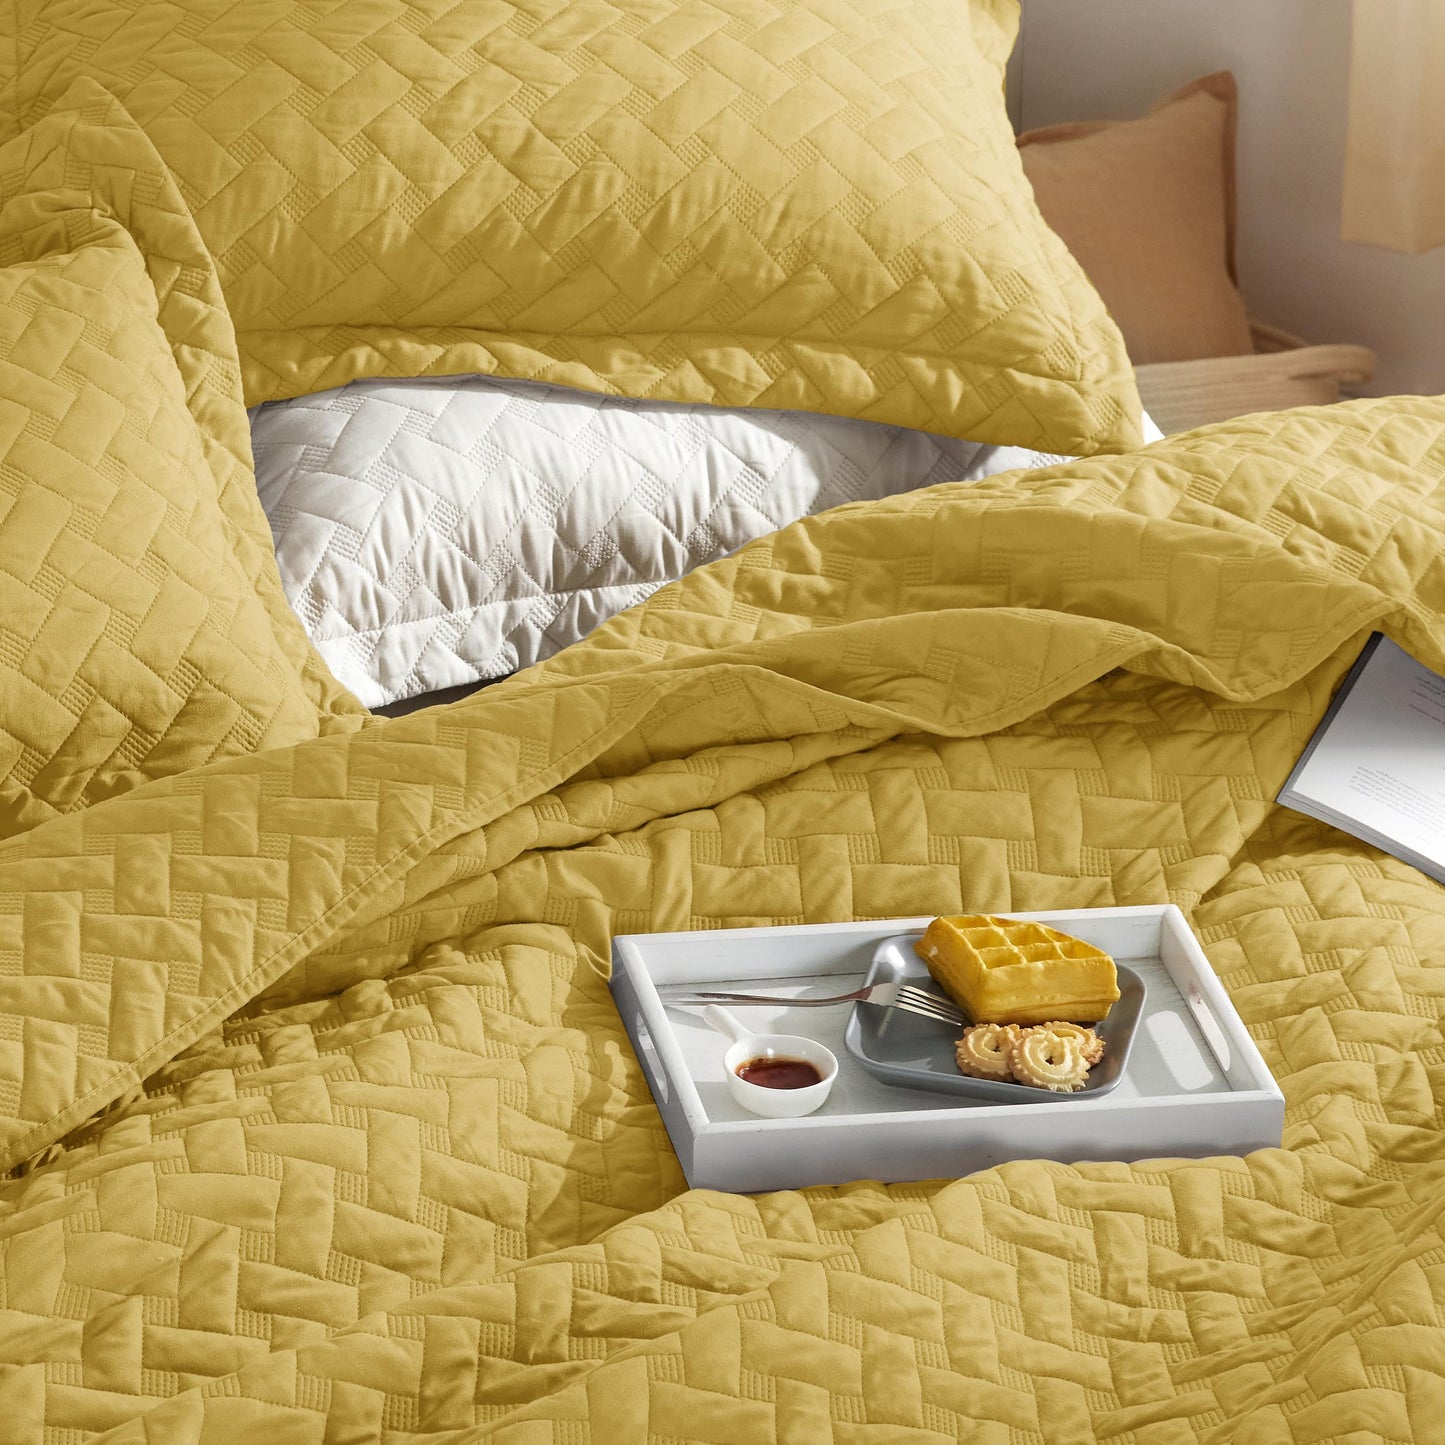 Bedsure Queen Quilt Bedding Set - Lightweight Spring Quilt Full/Queen - Mustard Yellow Bedspread Queen Size - Bedding Coverlet for All Seasons (Includes 1 Quilt, 2 Pillow Shams)